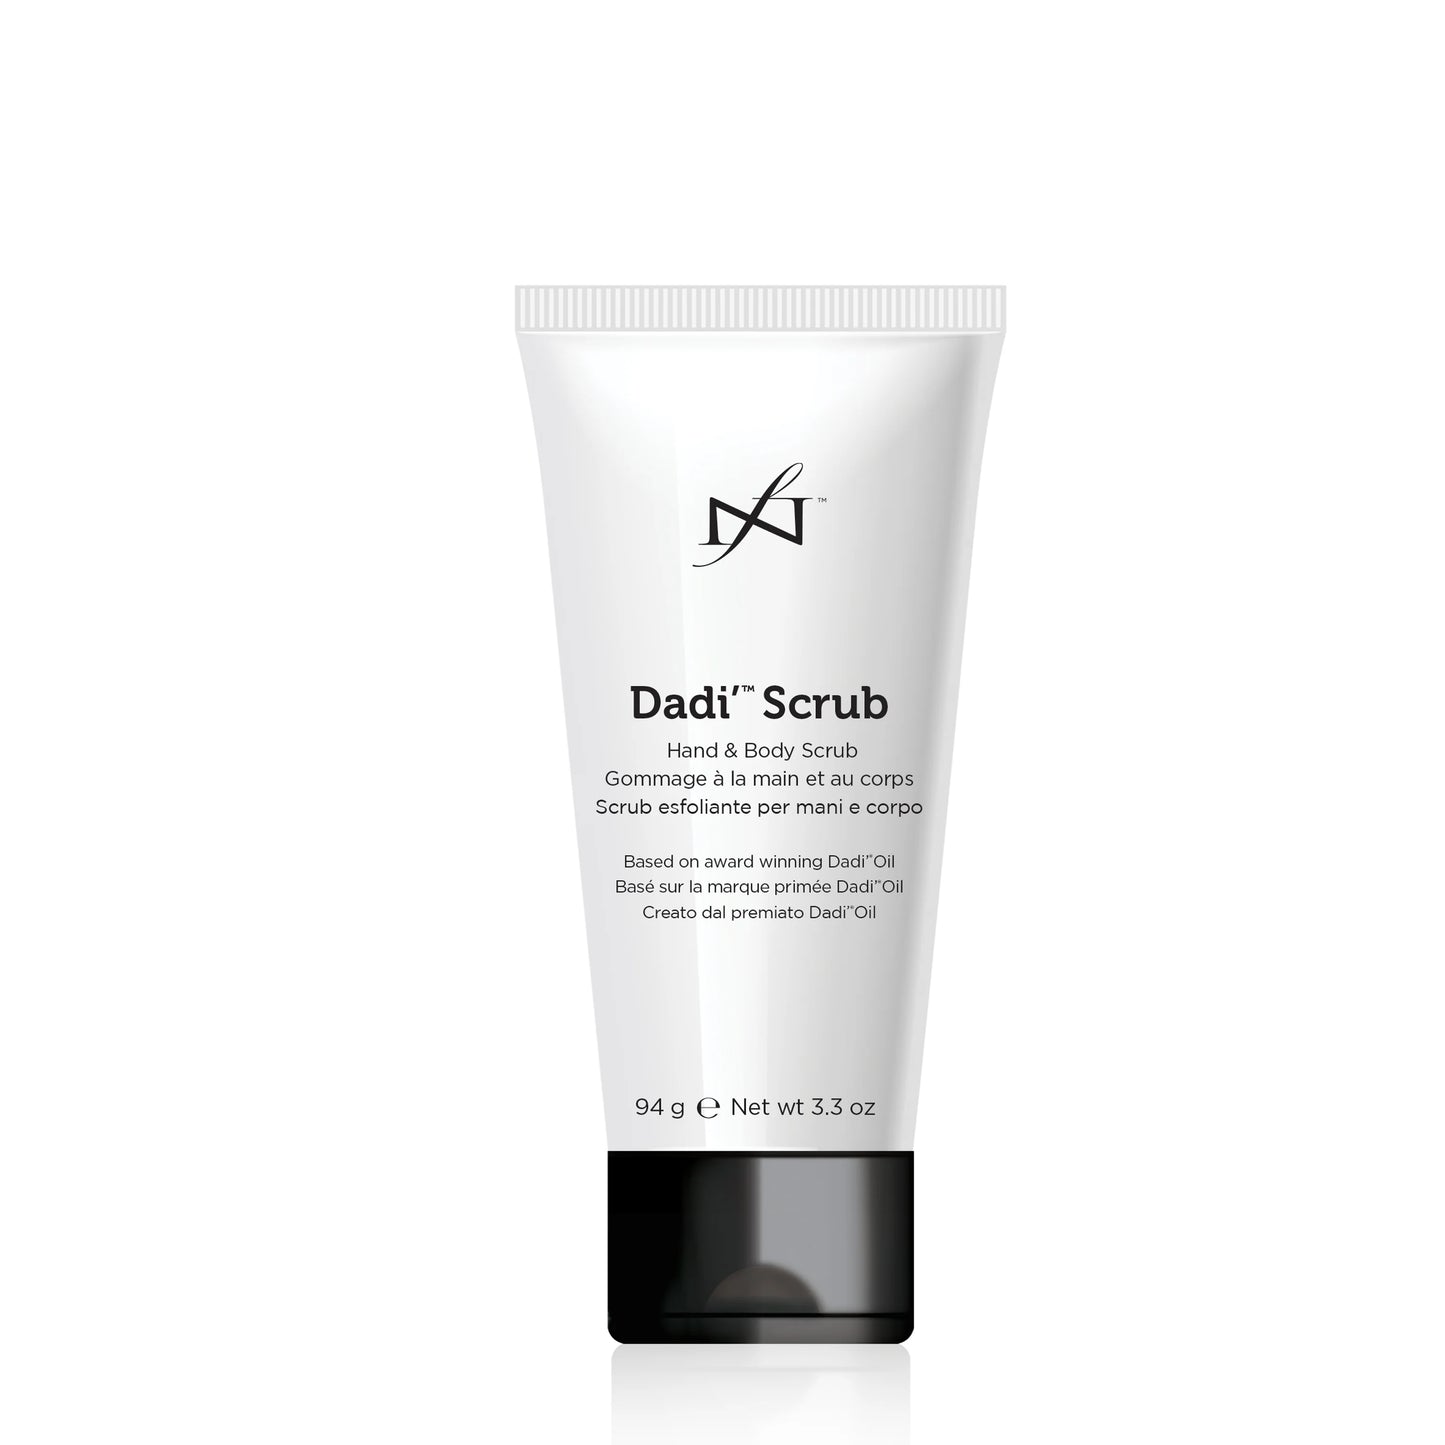 Dadi' Scrub | Famous Names Products